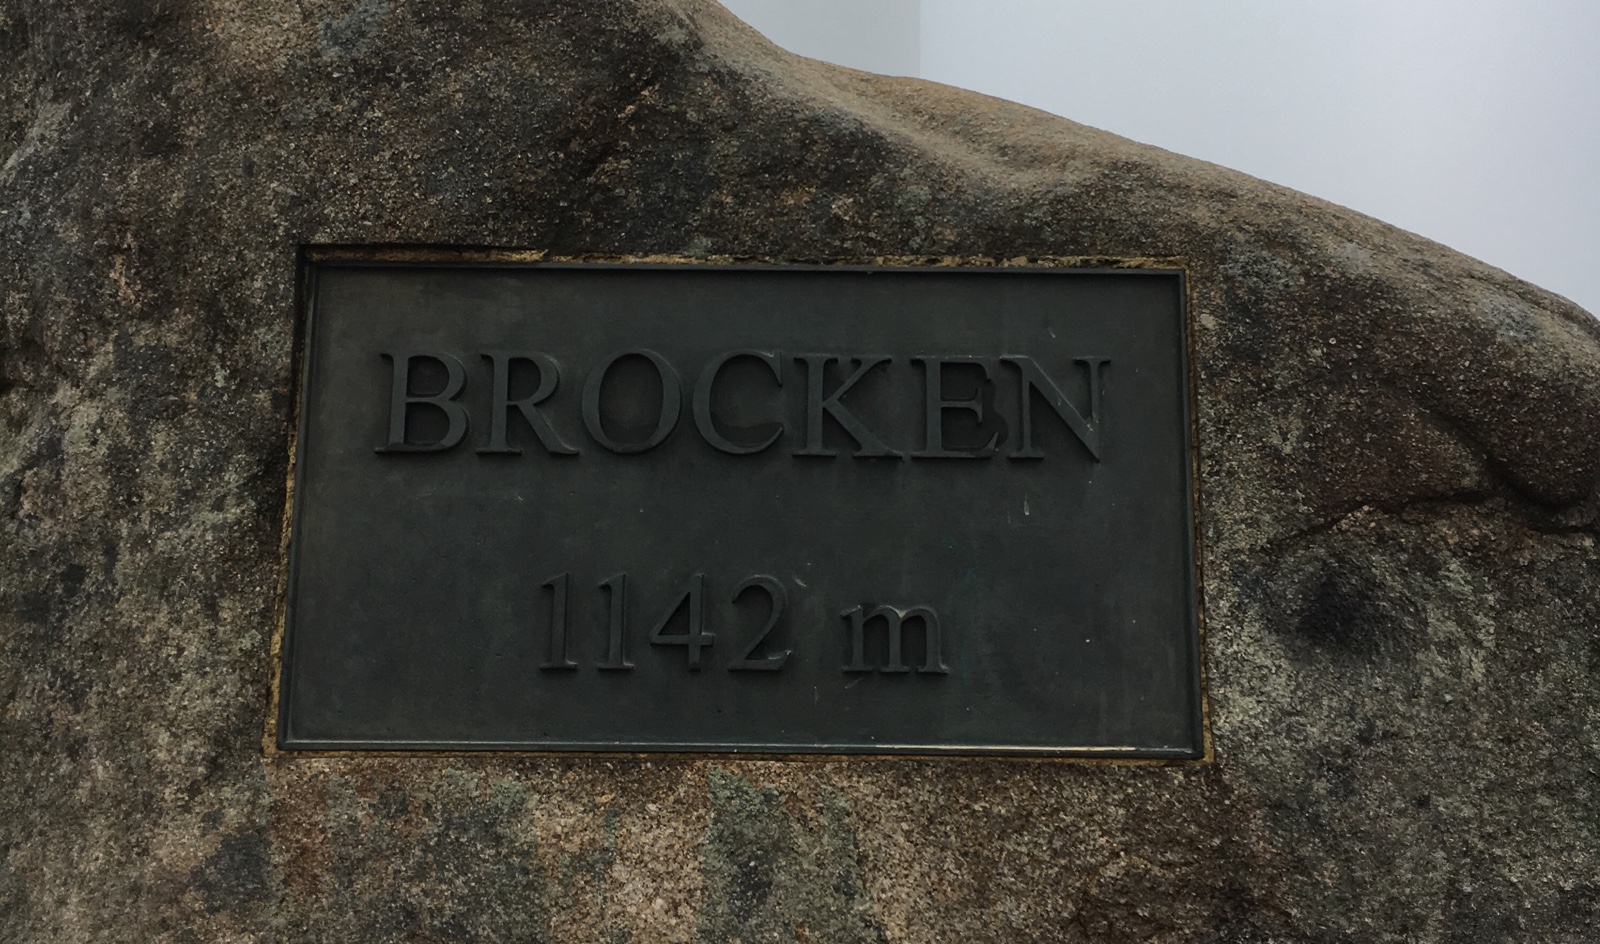 Brocken 1142 m ✔️